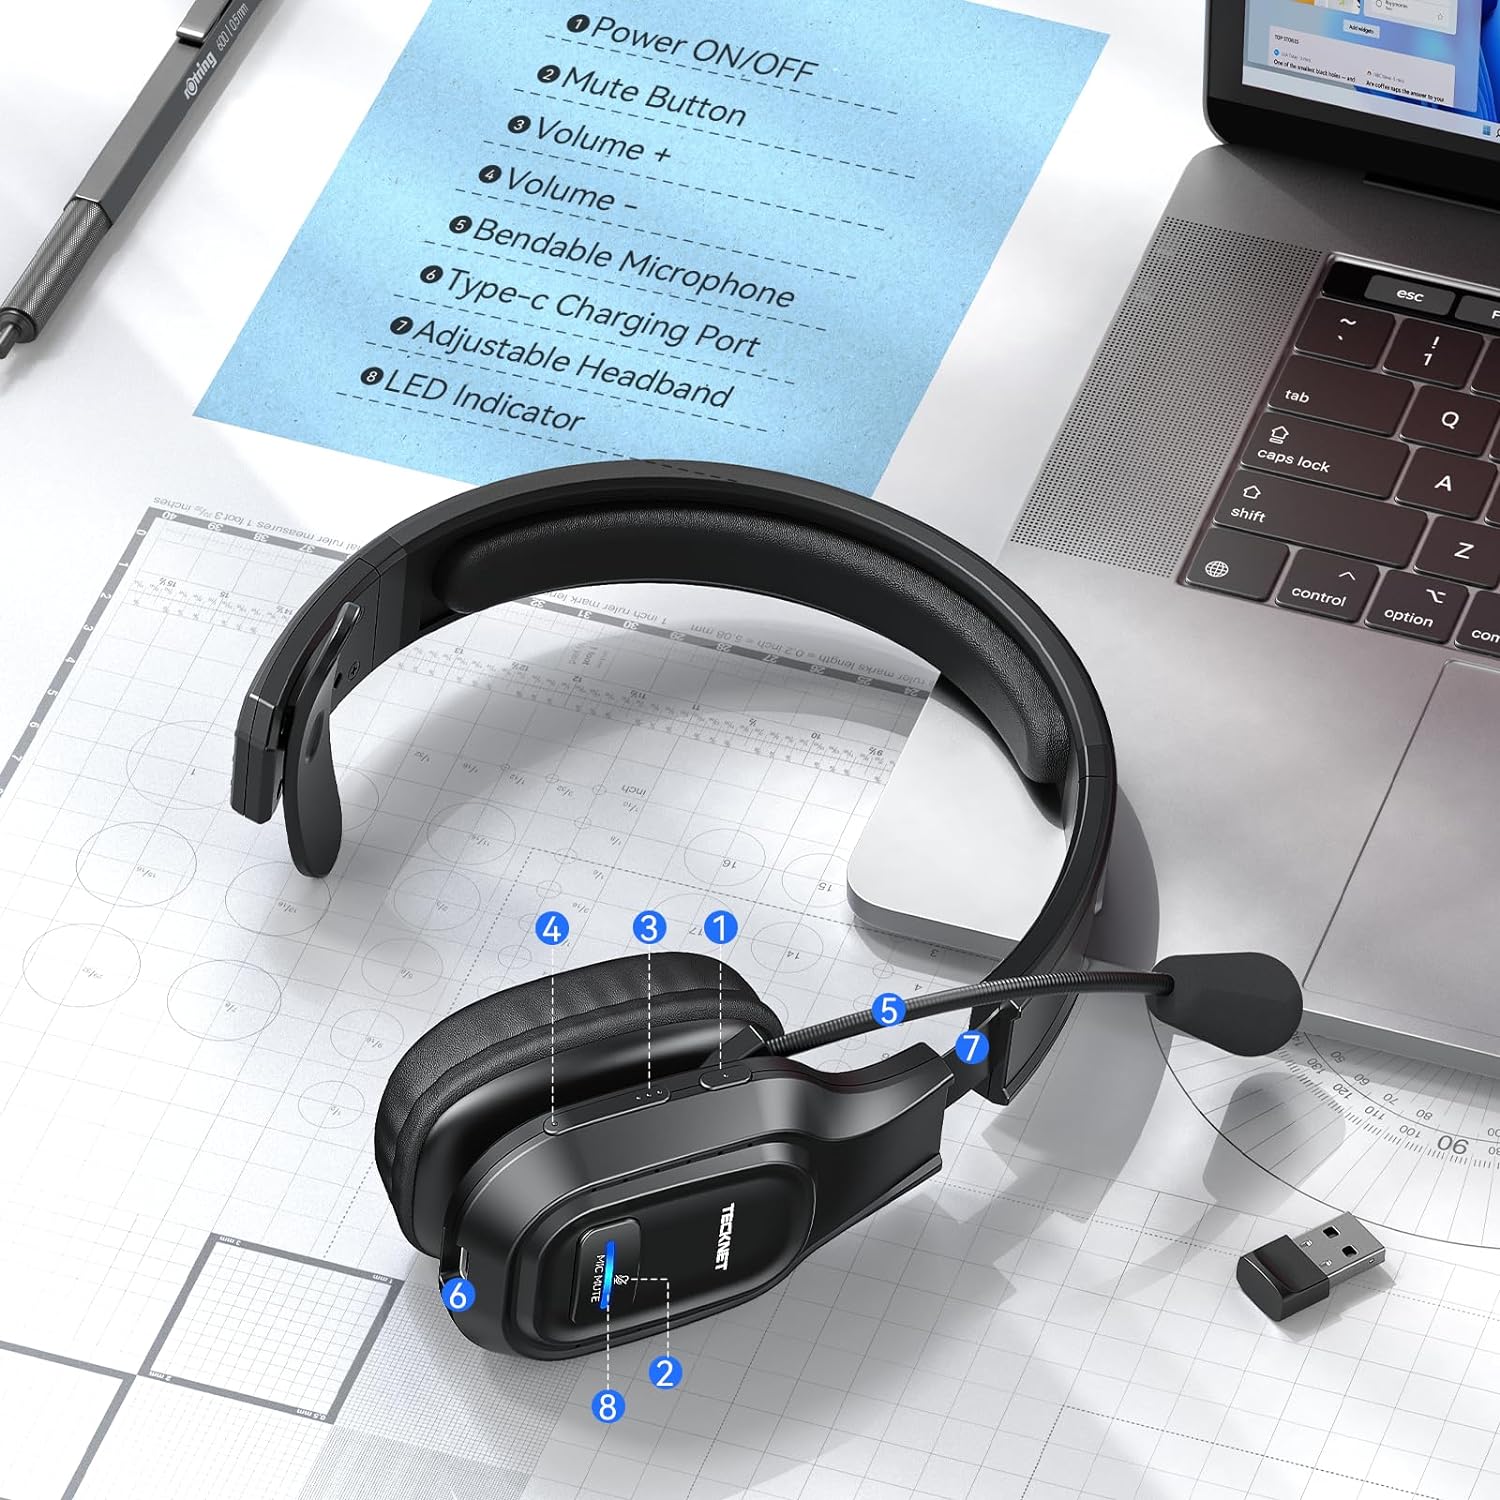 TECKNET Trucker Bluetooth Headset with Microphone Noise Canceling On Ear Headphones - $45